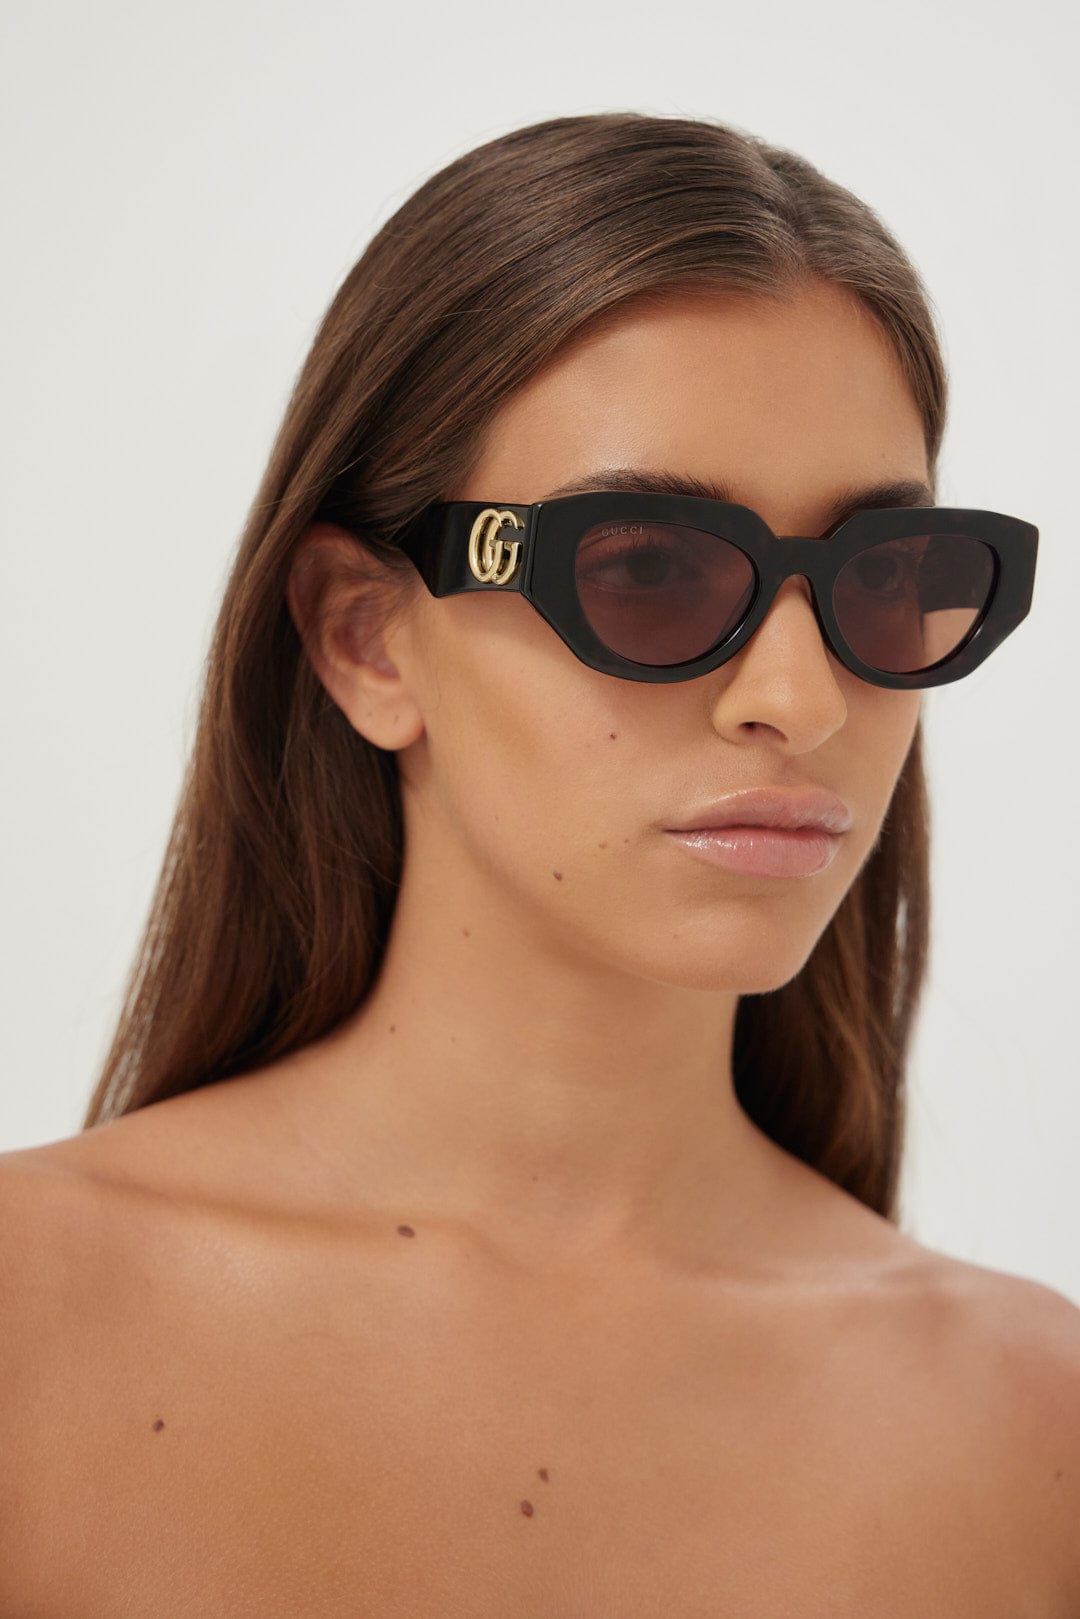 Gucci havana round chuncky sunglasses - Eyewear Club